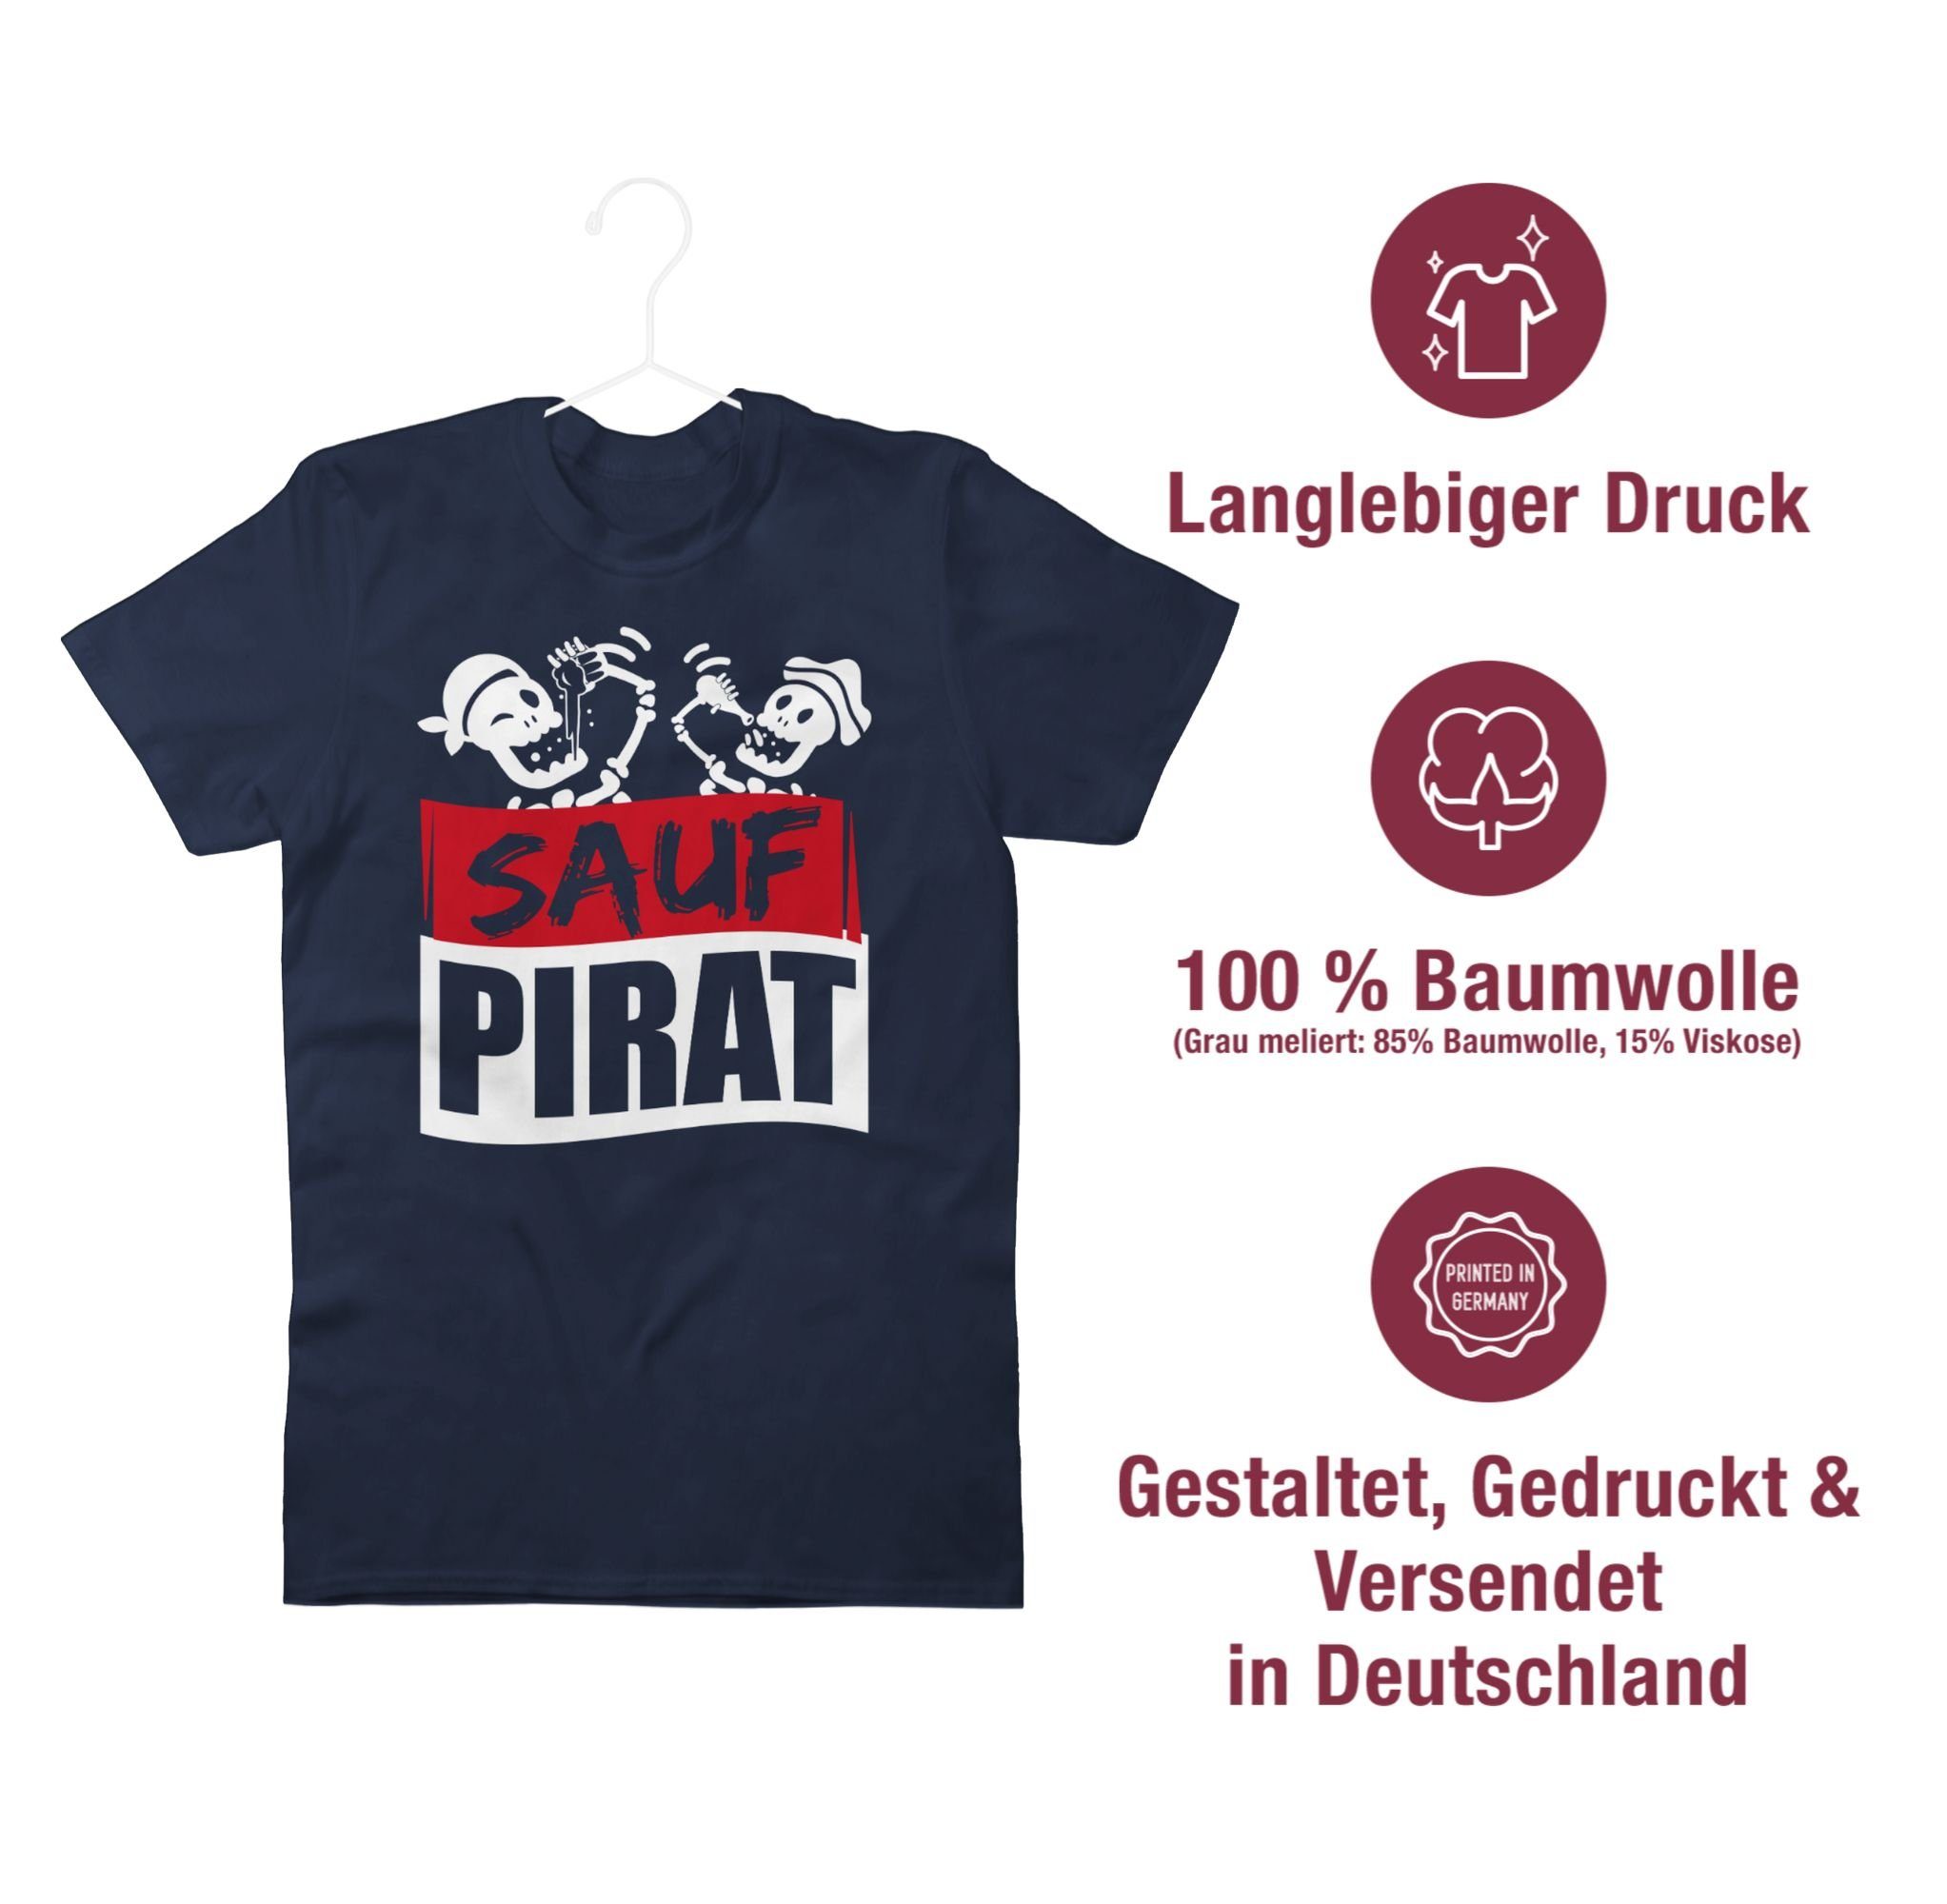 Shirtracer T-Shirt Sauf Pirat - weiß/rot Karneval Outfit 2 Navy Blau